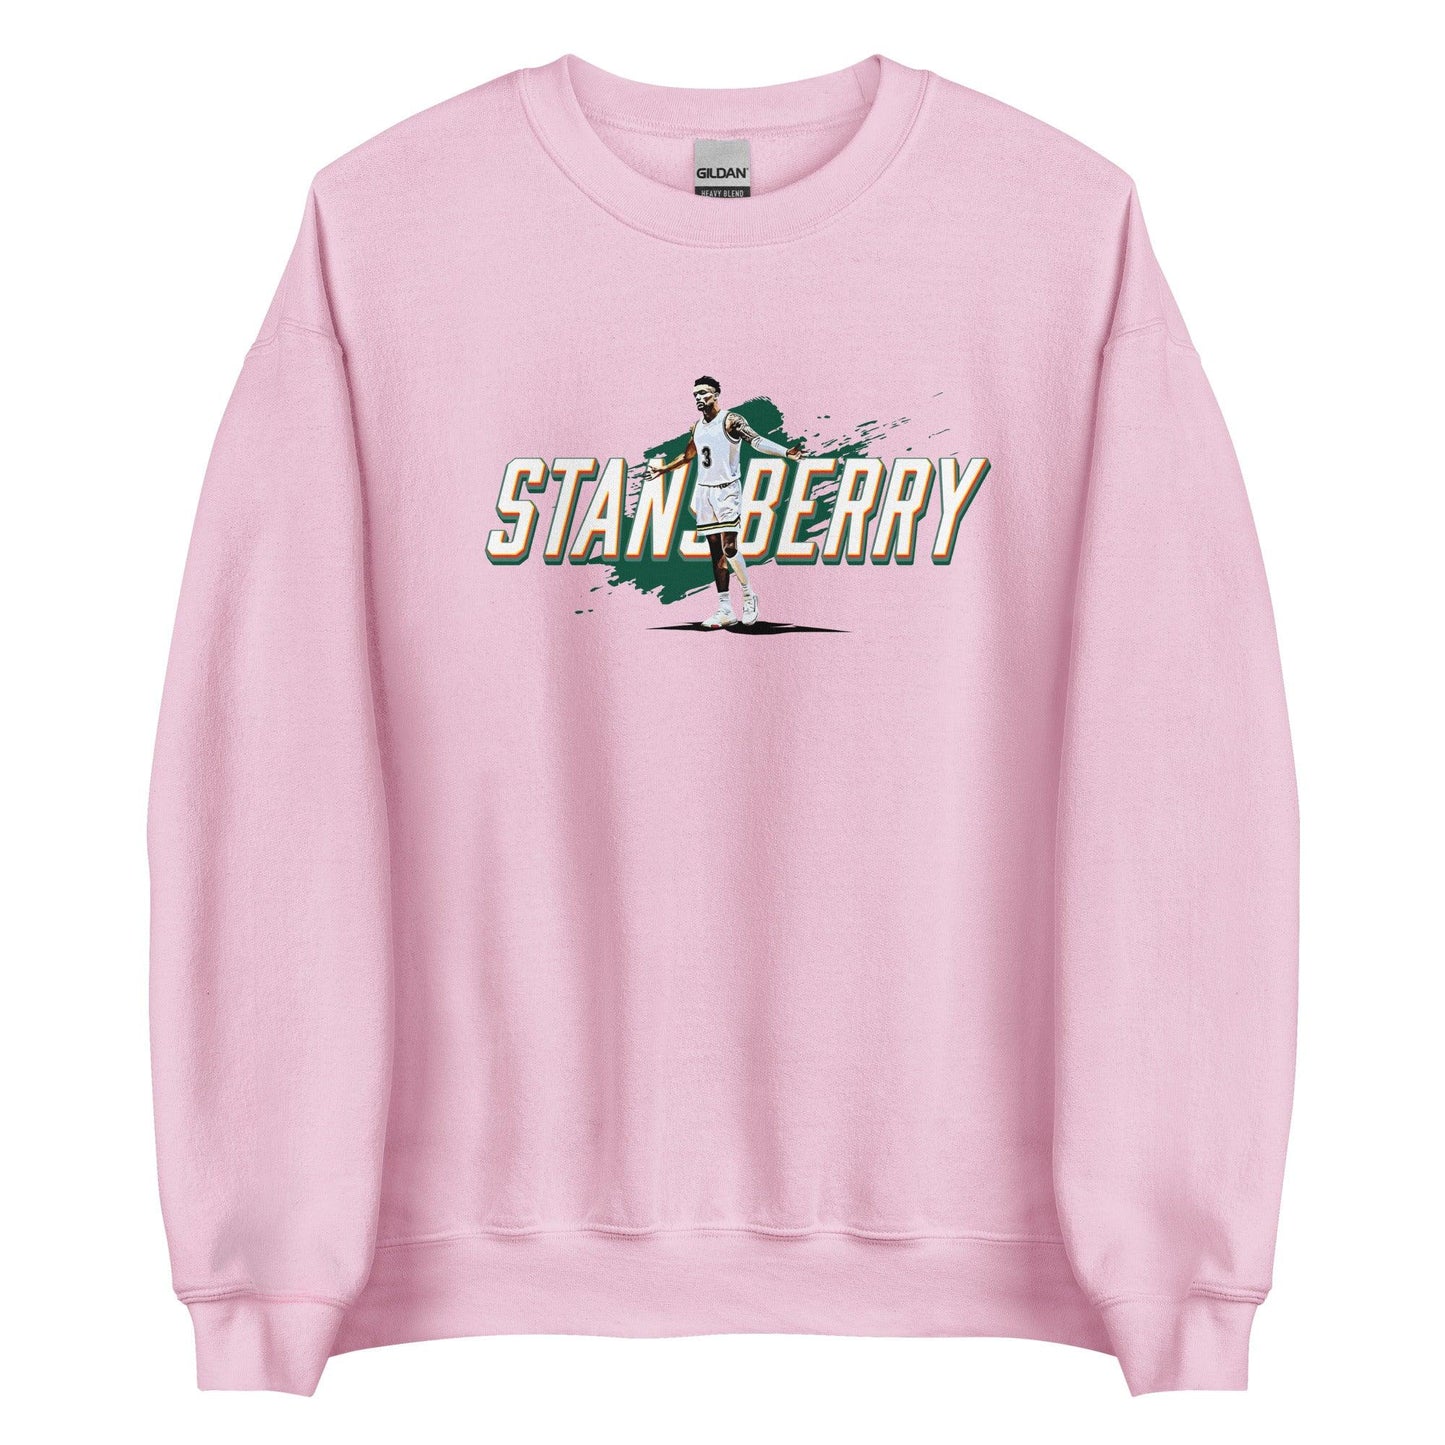 Eddie Stansberry “Essential” Sweatshirt - Fan Arch